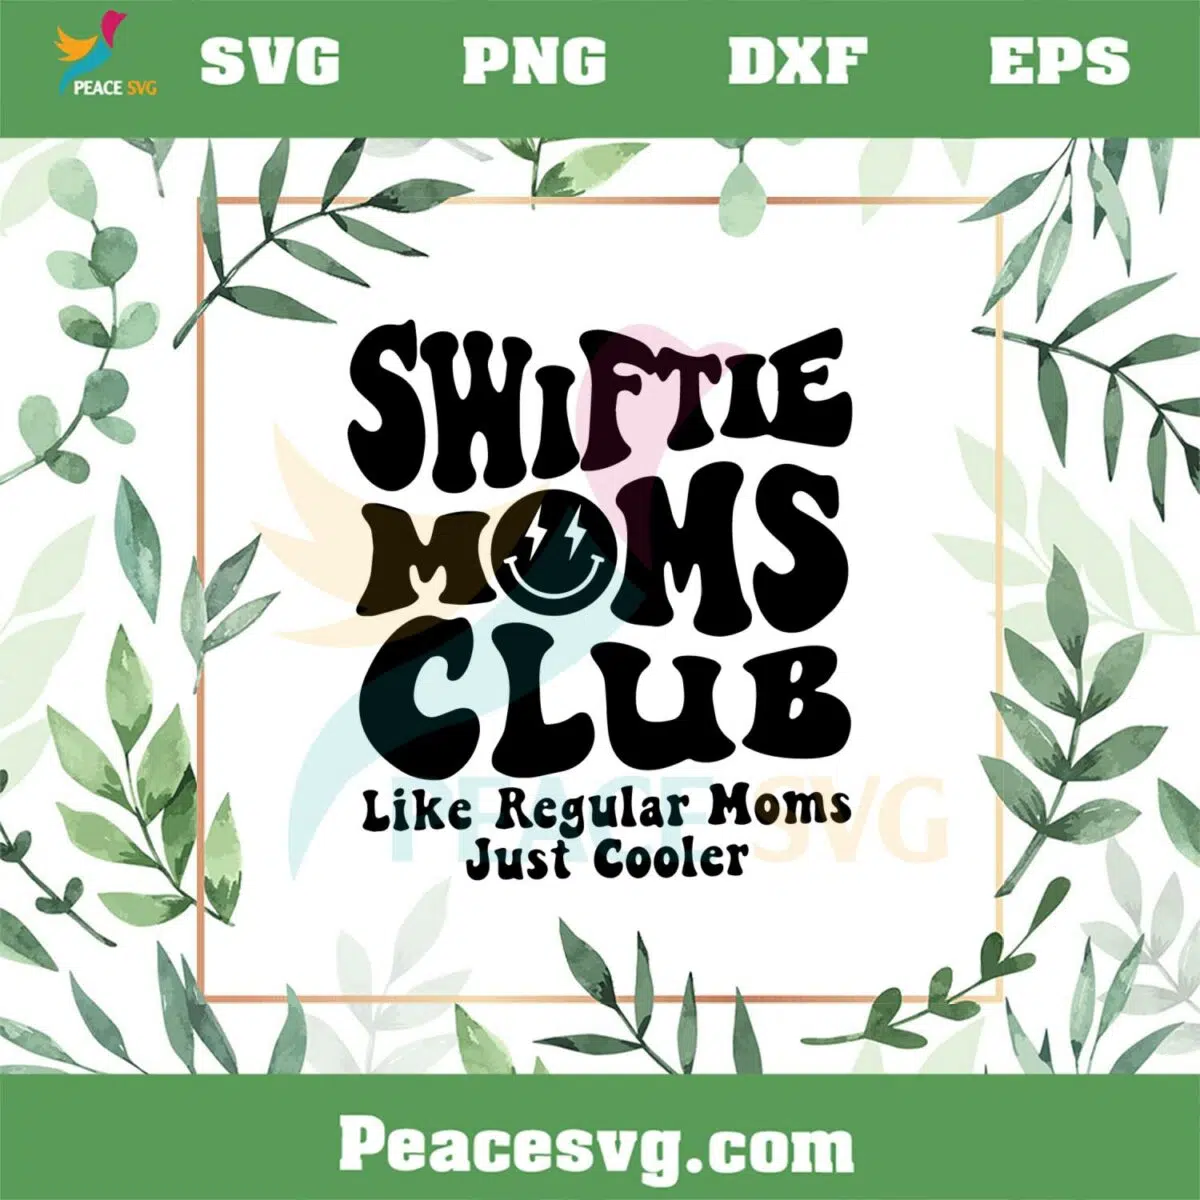 Swiftie Moms Club Like Regular Moms Just Cooler SVG Cutting Files